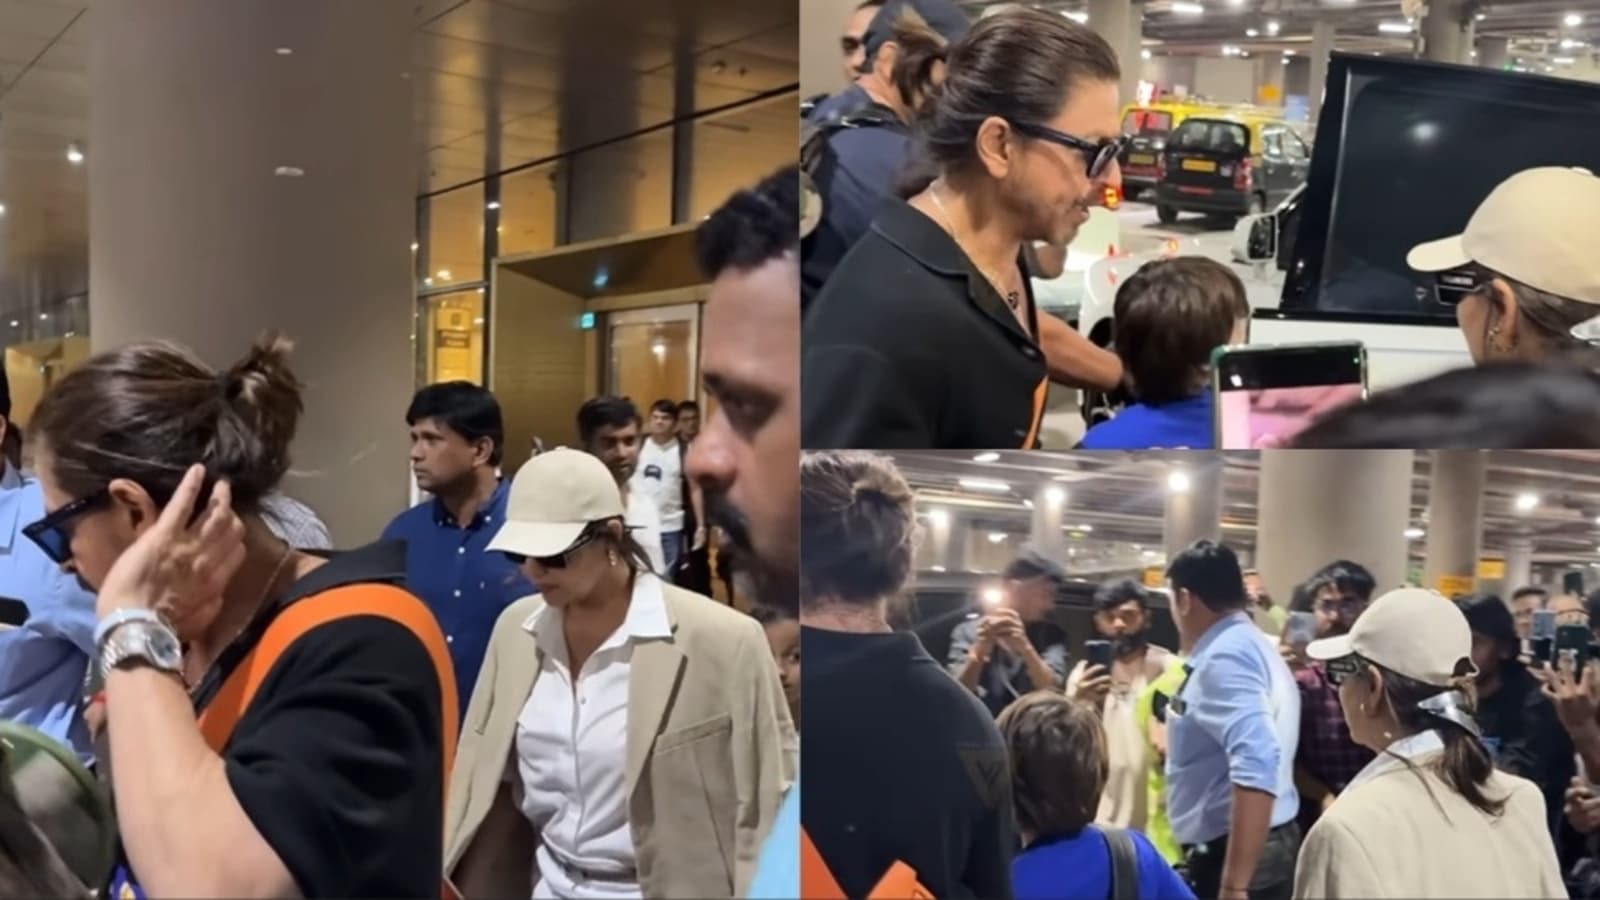 Shah Rukh Khan escorts Gauri Khan to their car as they return with son AbRam Khan from London. Watch